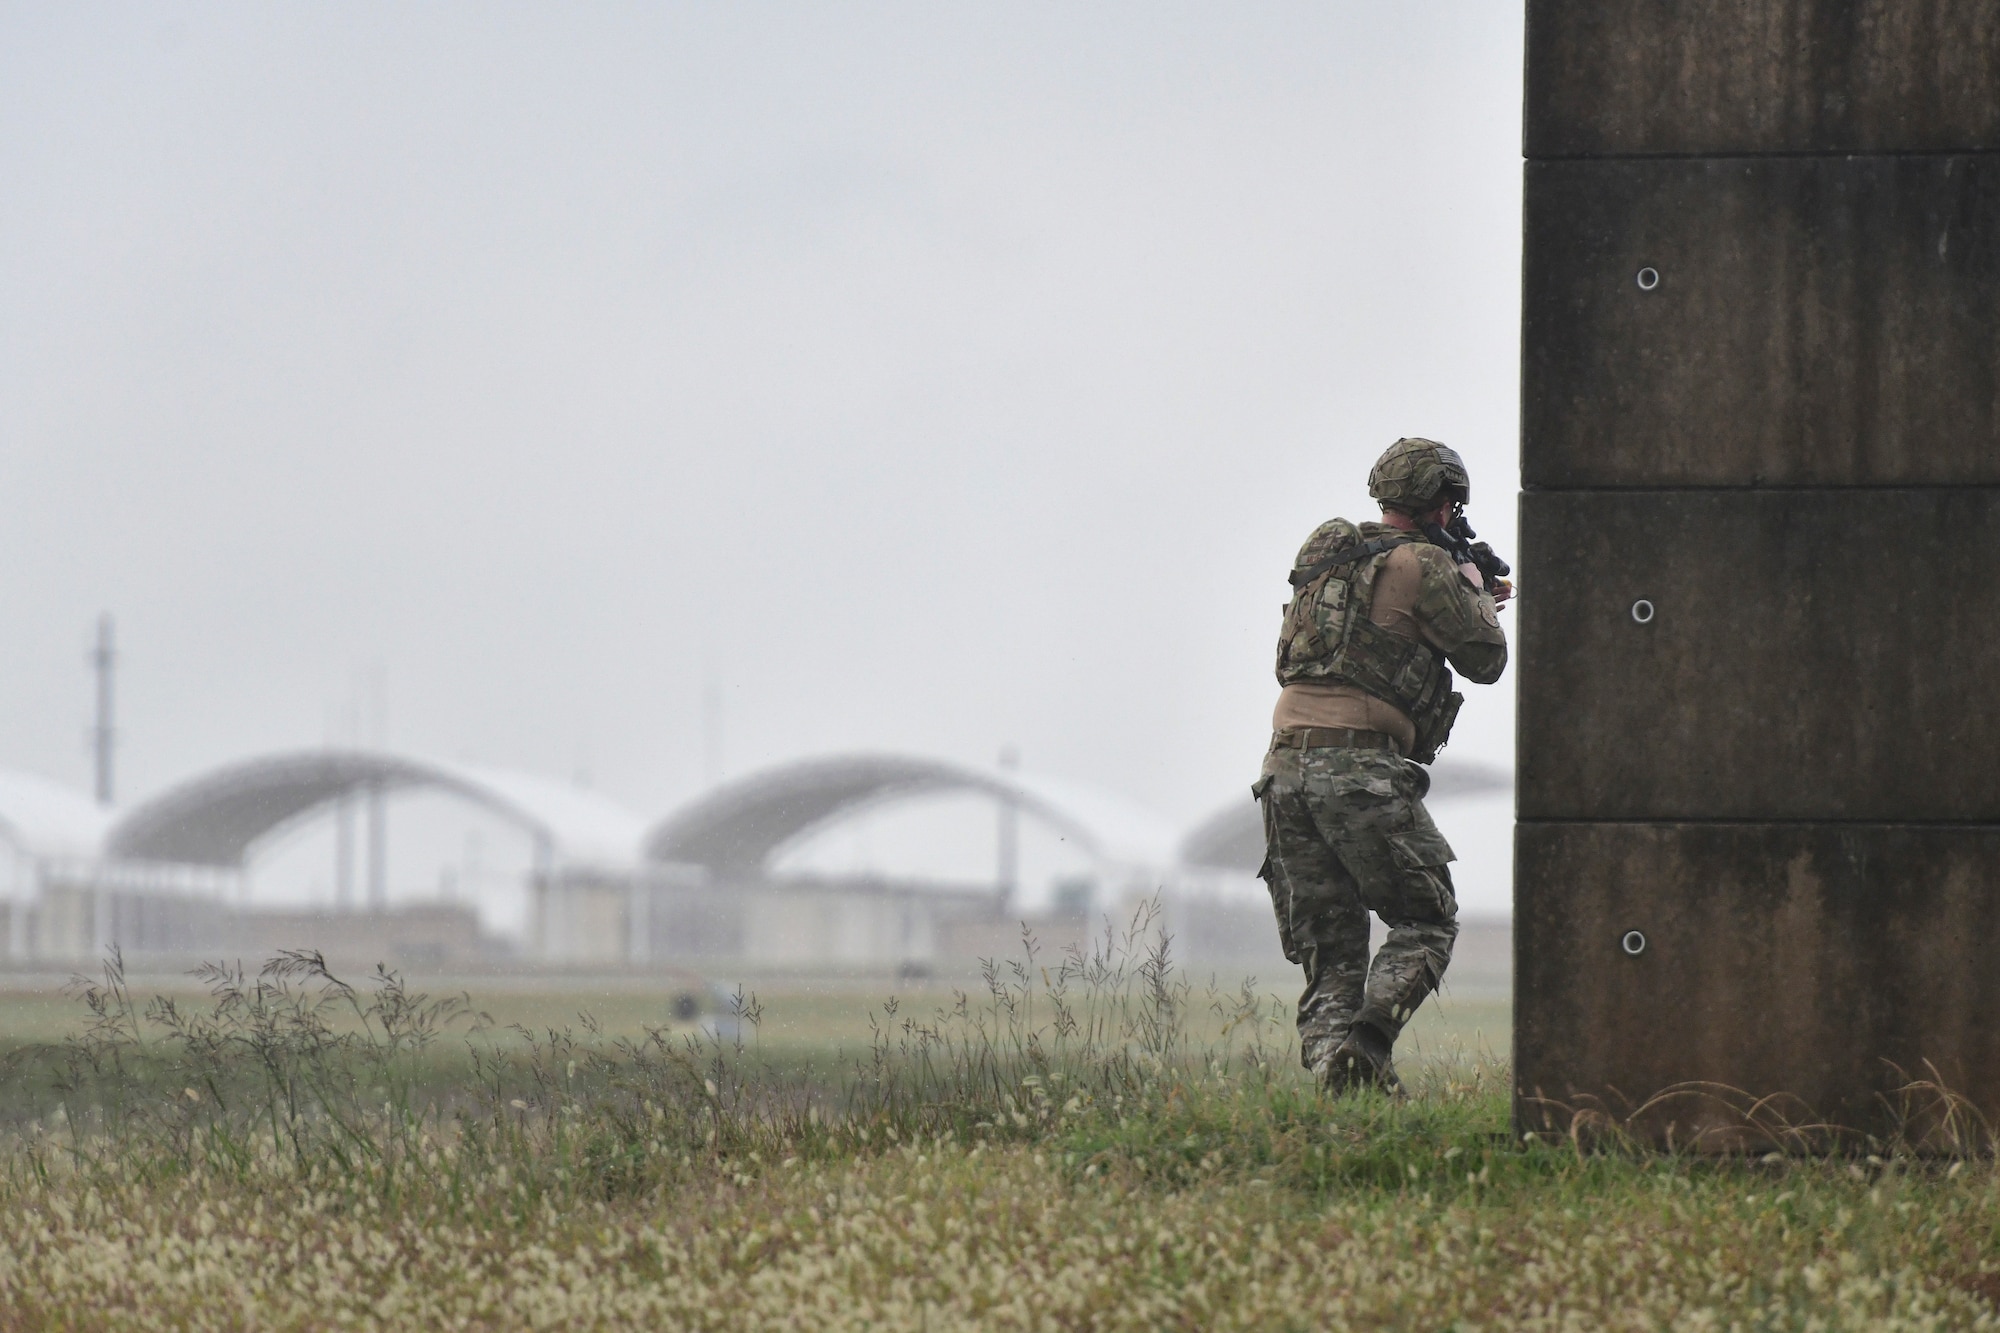 An Airman moves forward during training.